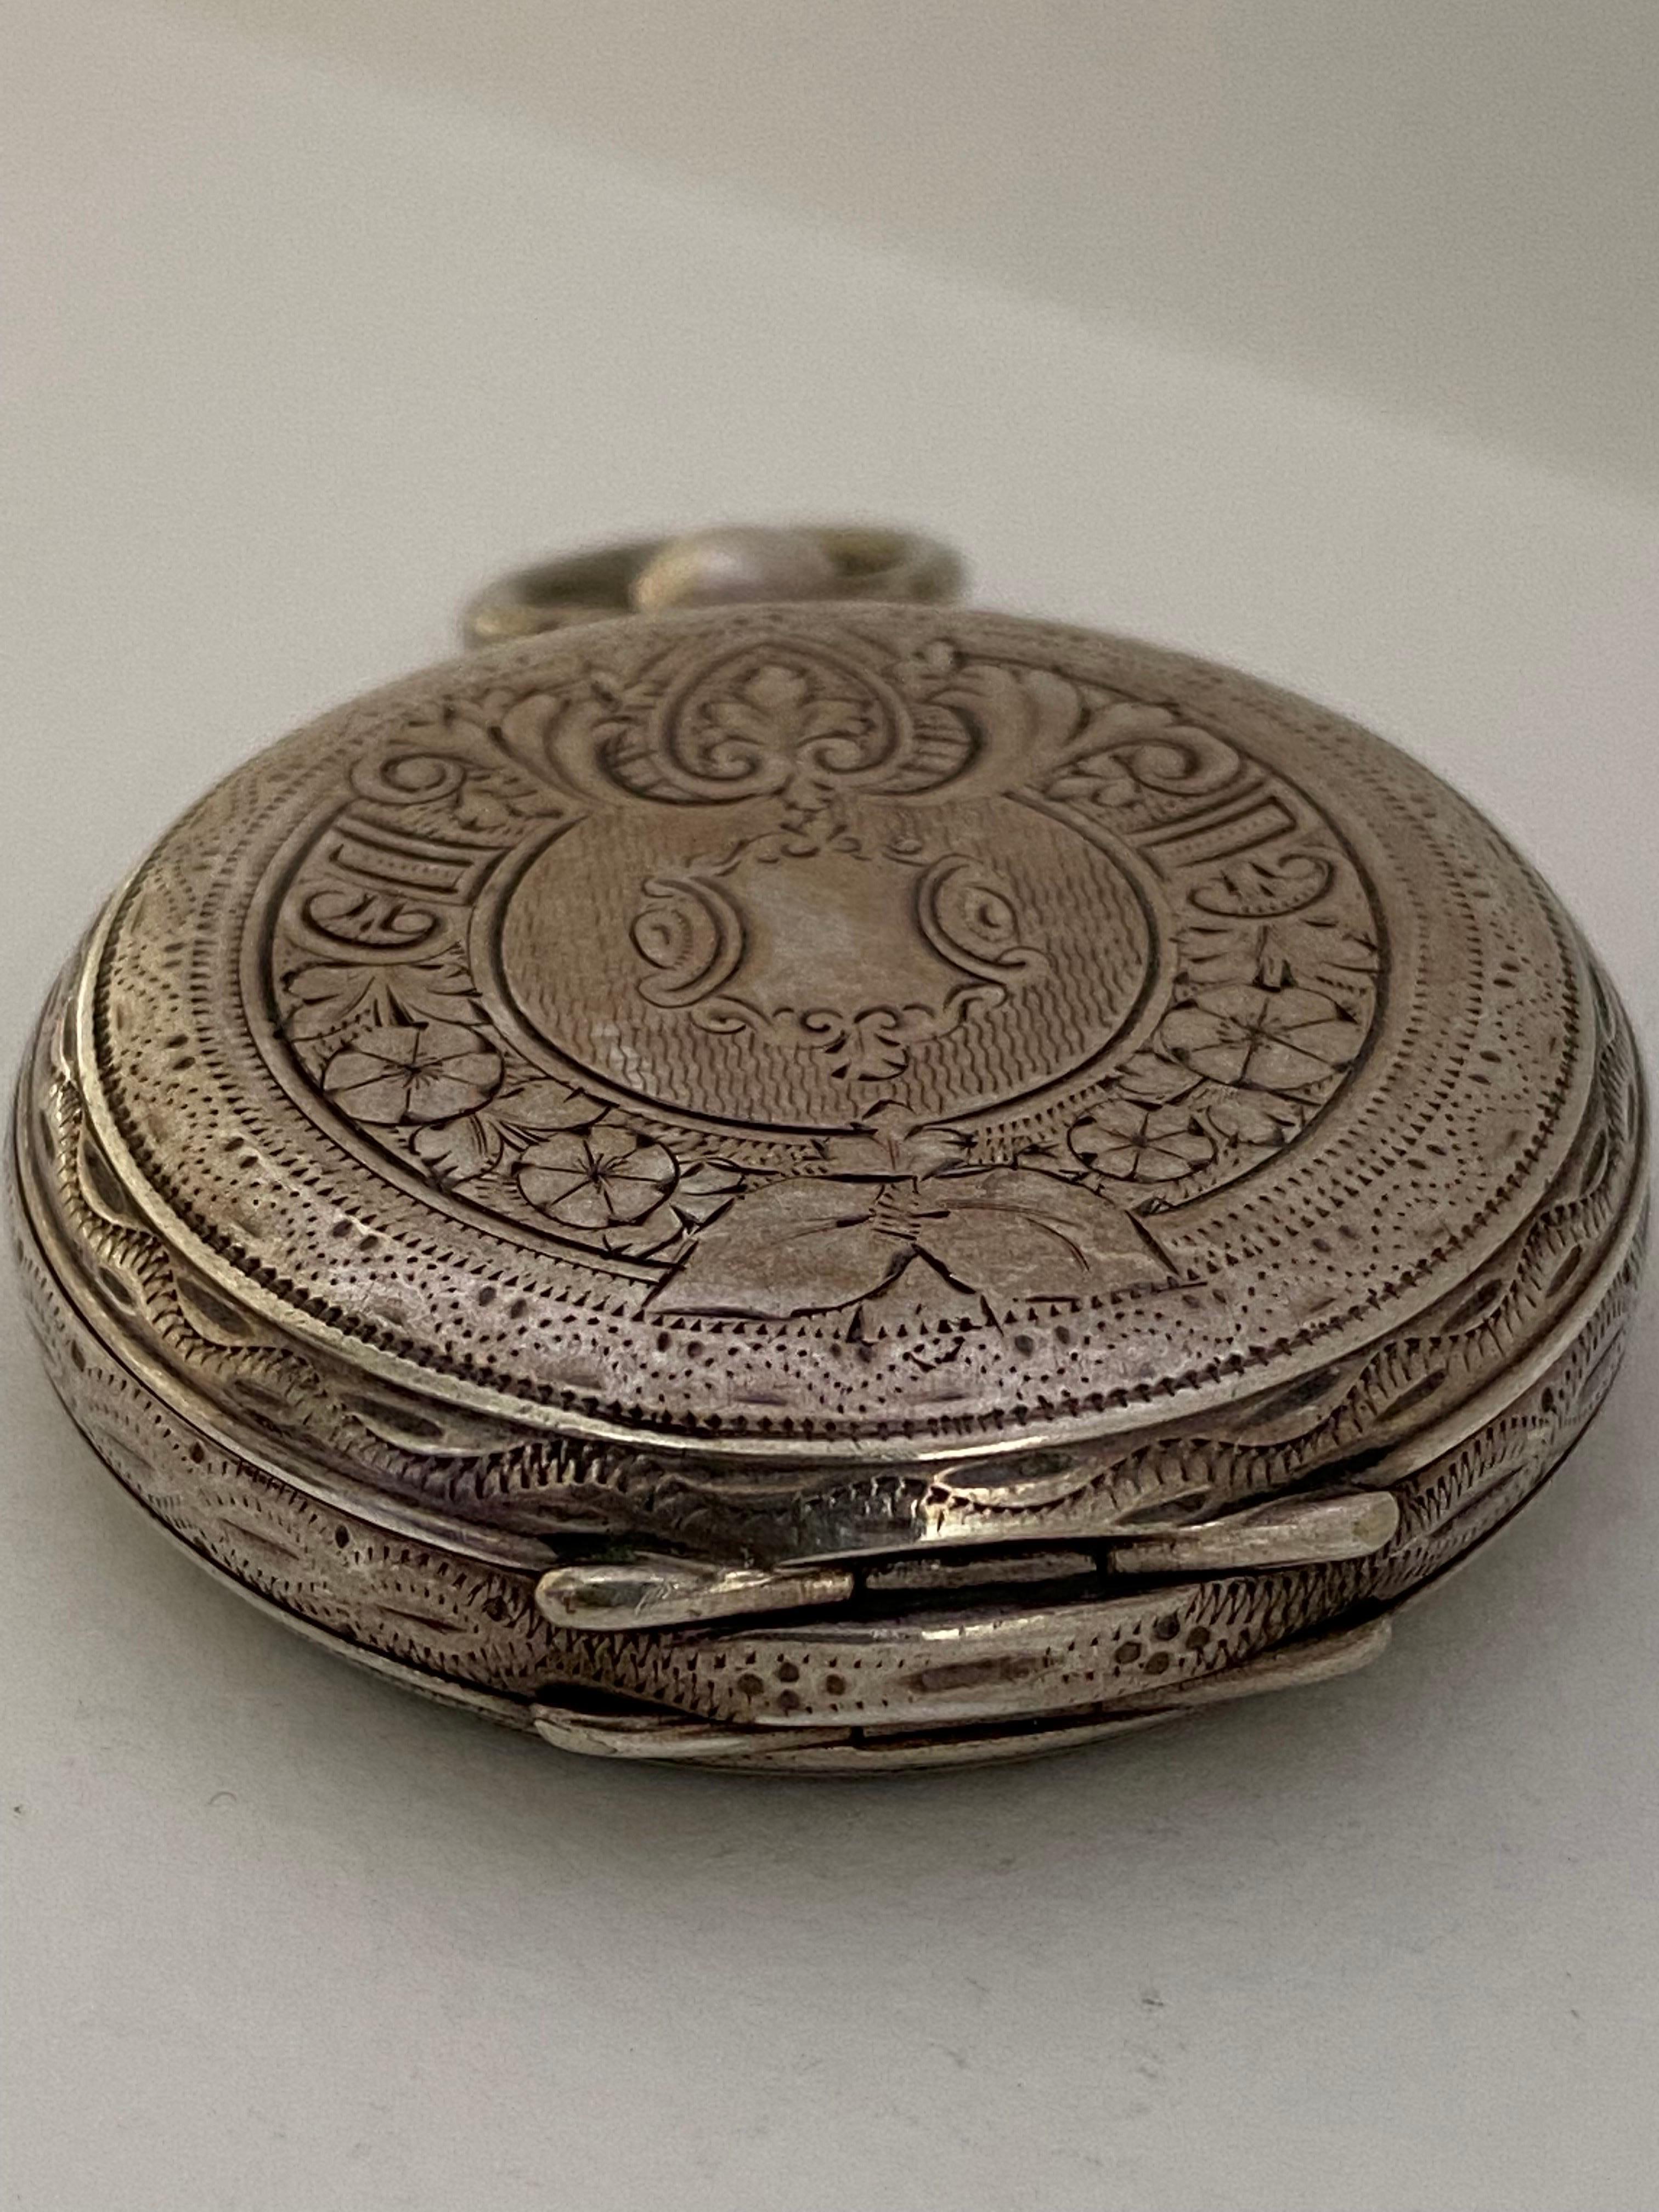 Antique Victorian Period Dimier Freres & Cie Silver & Enamel Pocket Watch For Sale 3